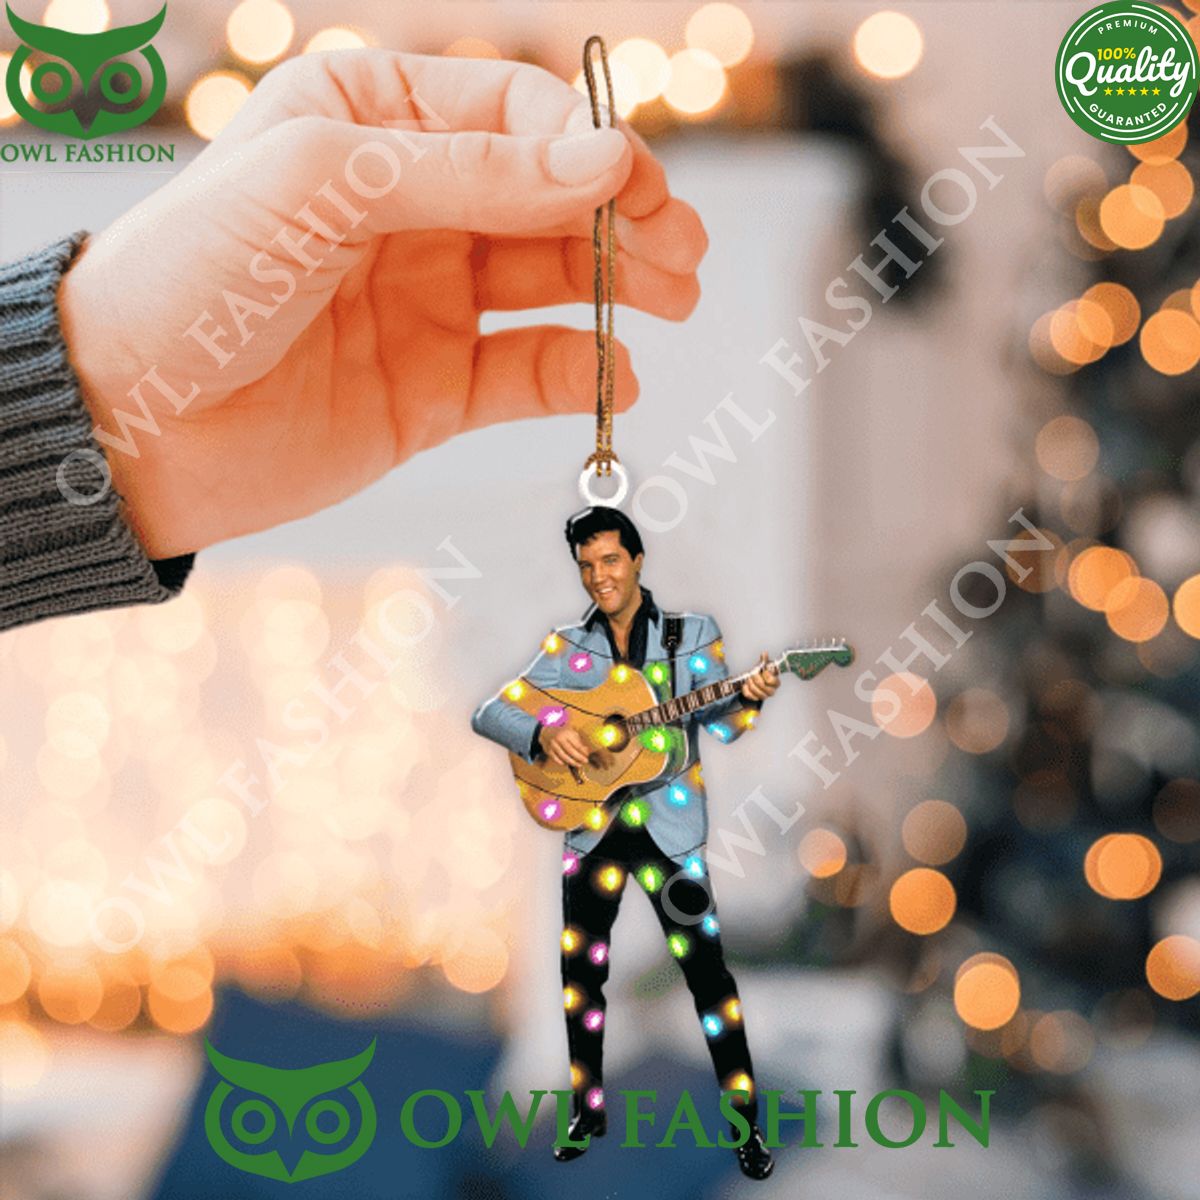 elvis presley guitar plastic ornament 1 I1kRR.jpg